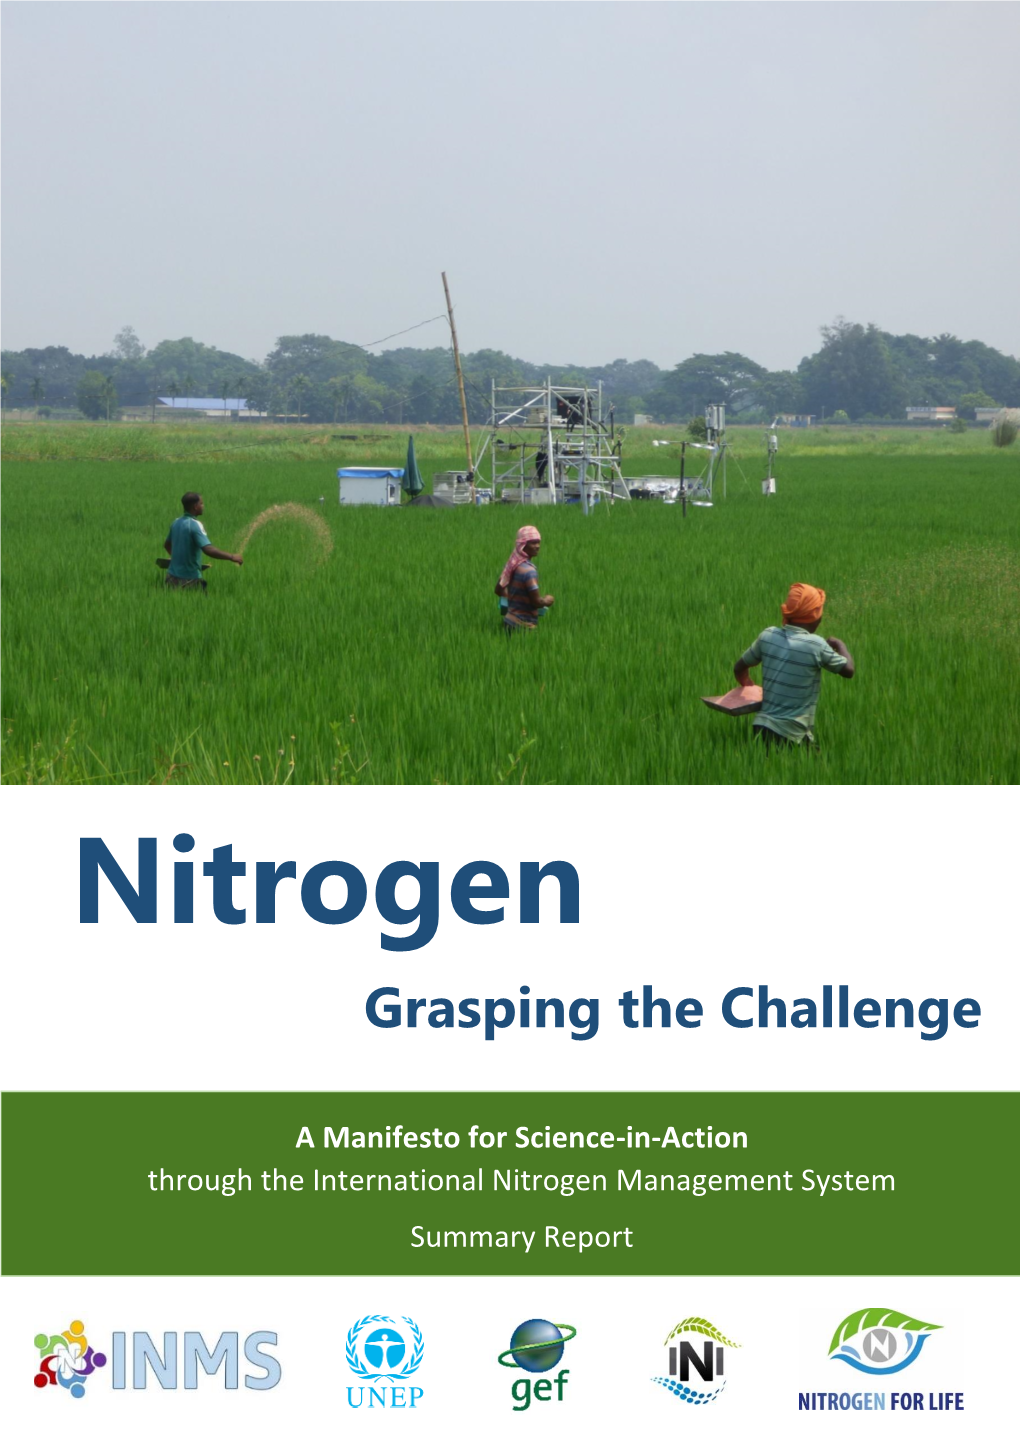 Nitrogen: Grasping the Challenge